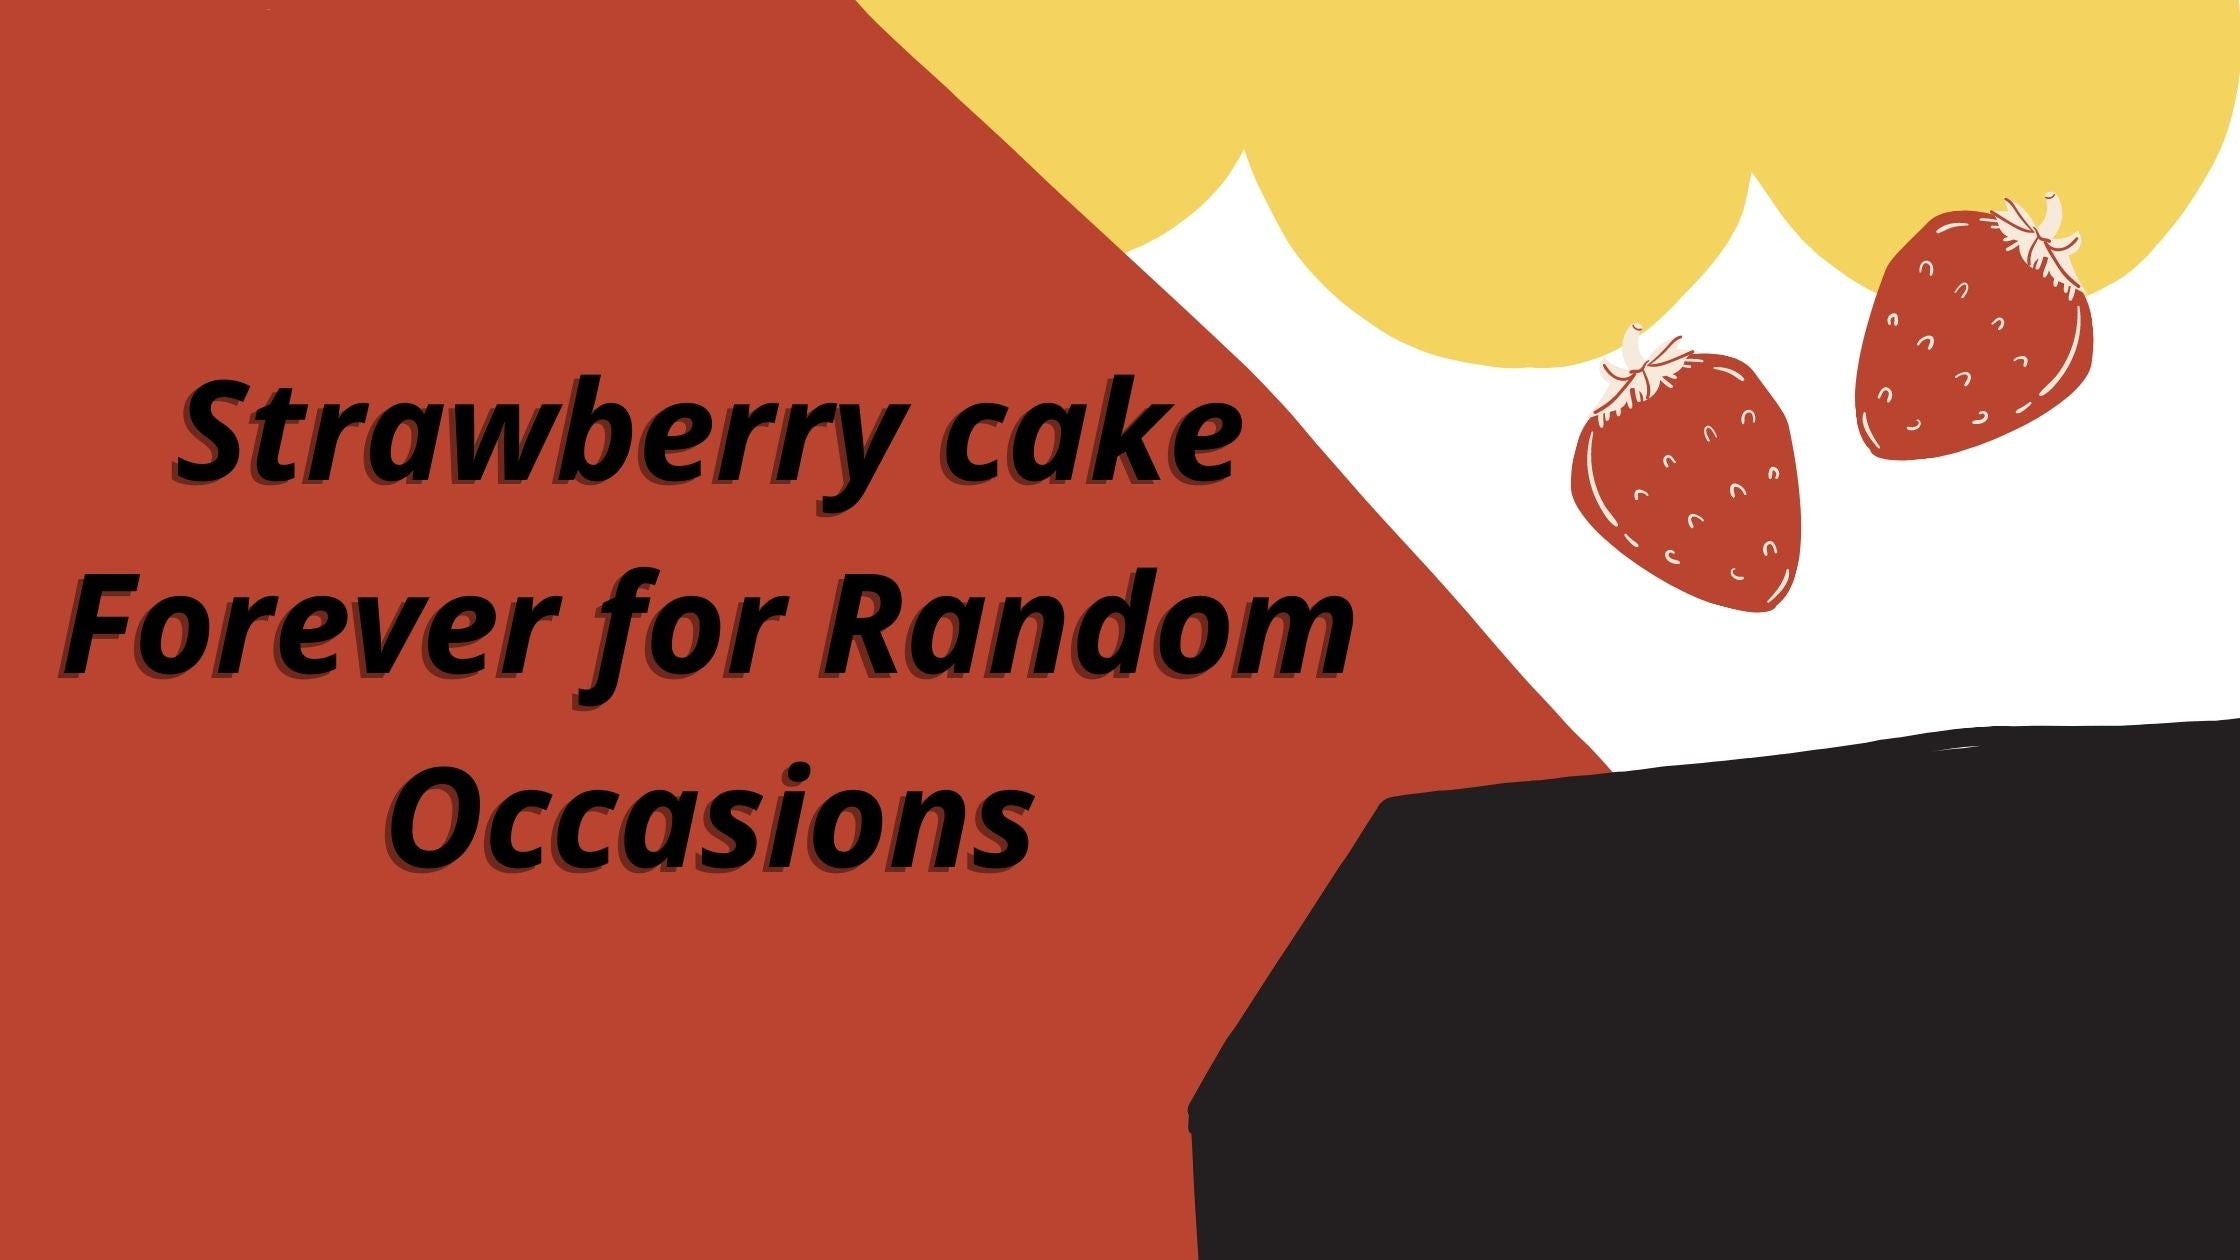 Strawberry cake Forever for Random Occasions